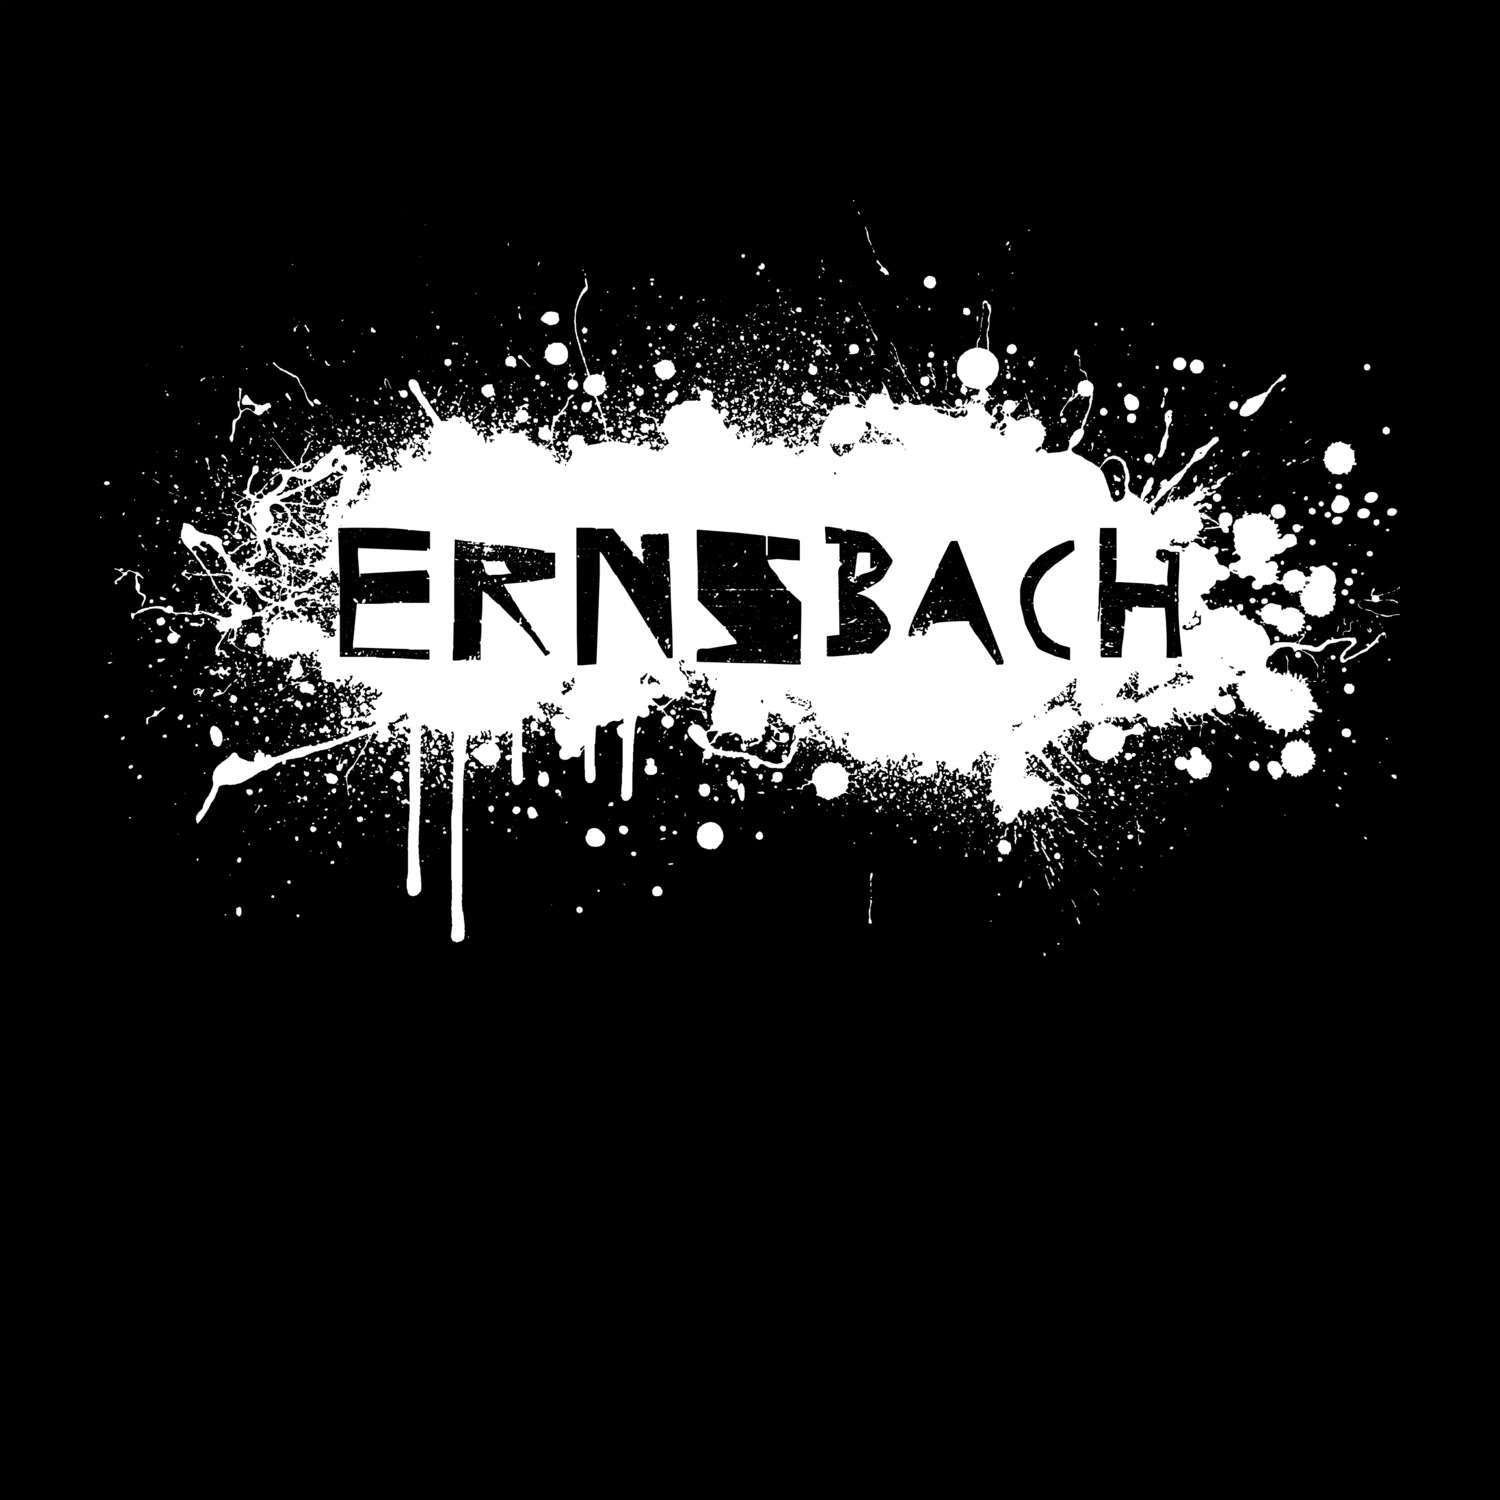 Ernsbach T-Shirt »Paint Splash Punk«